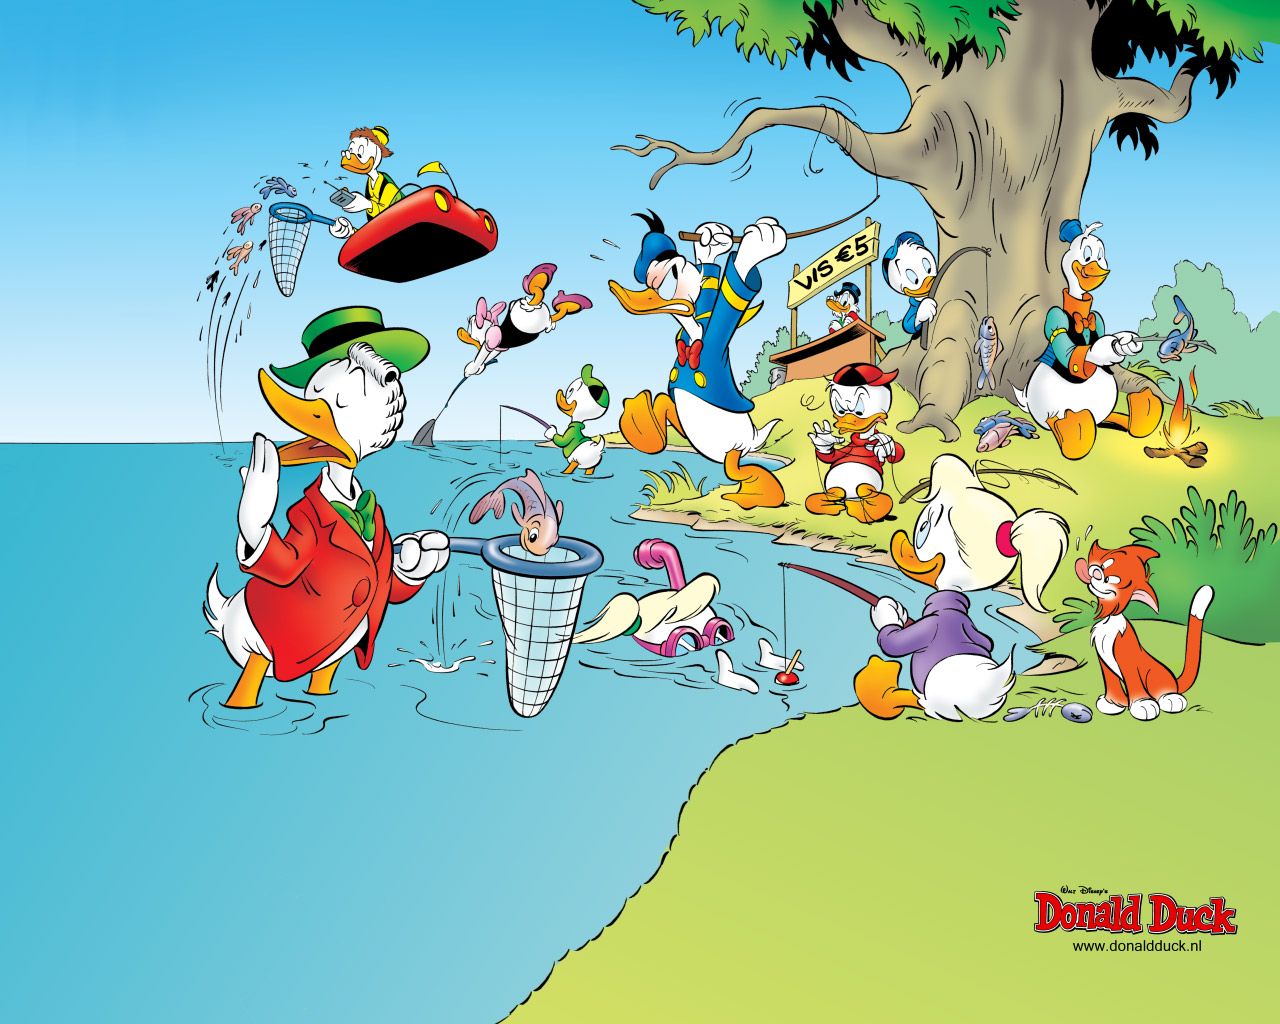 Donald duck et ses amis fonds ecran